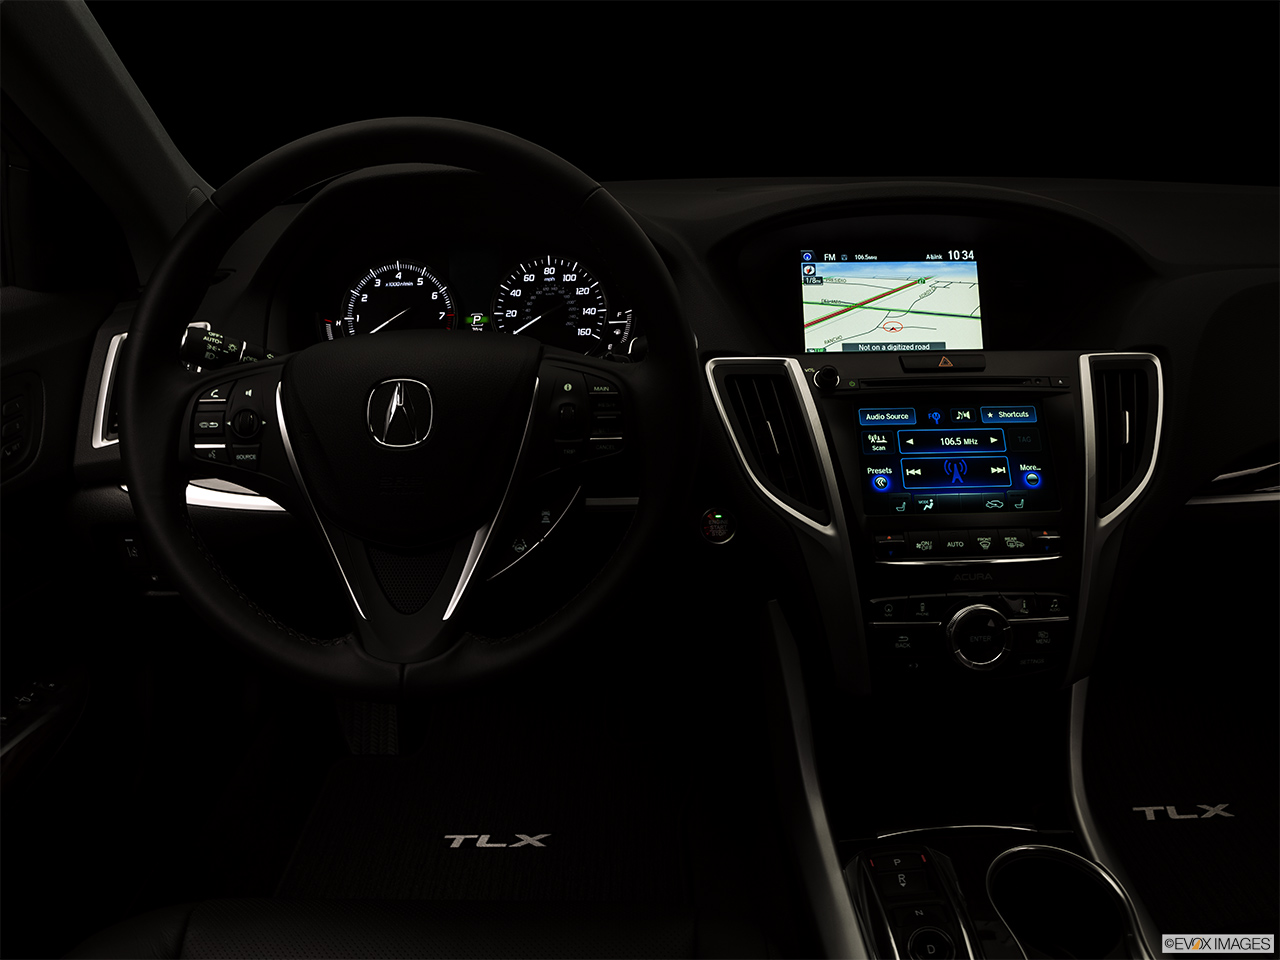 2017 Acura TLX 3.5L Centered wide dash shot - "night" shot. 